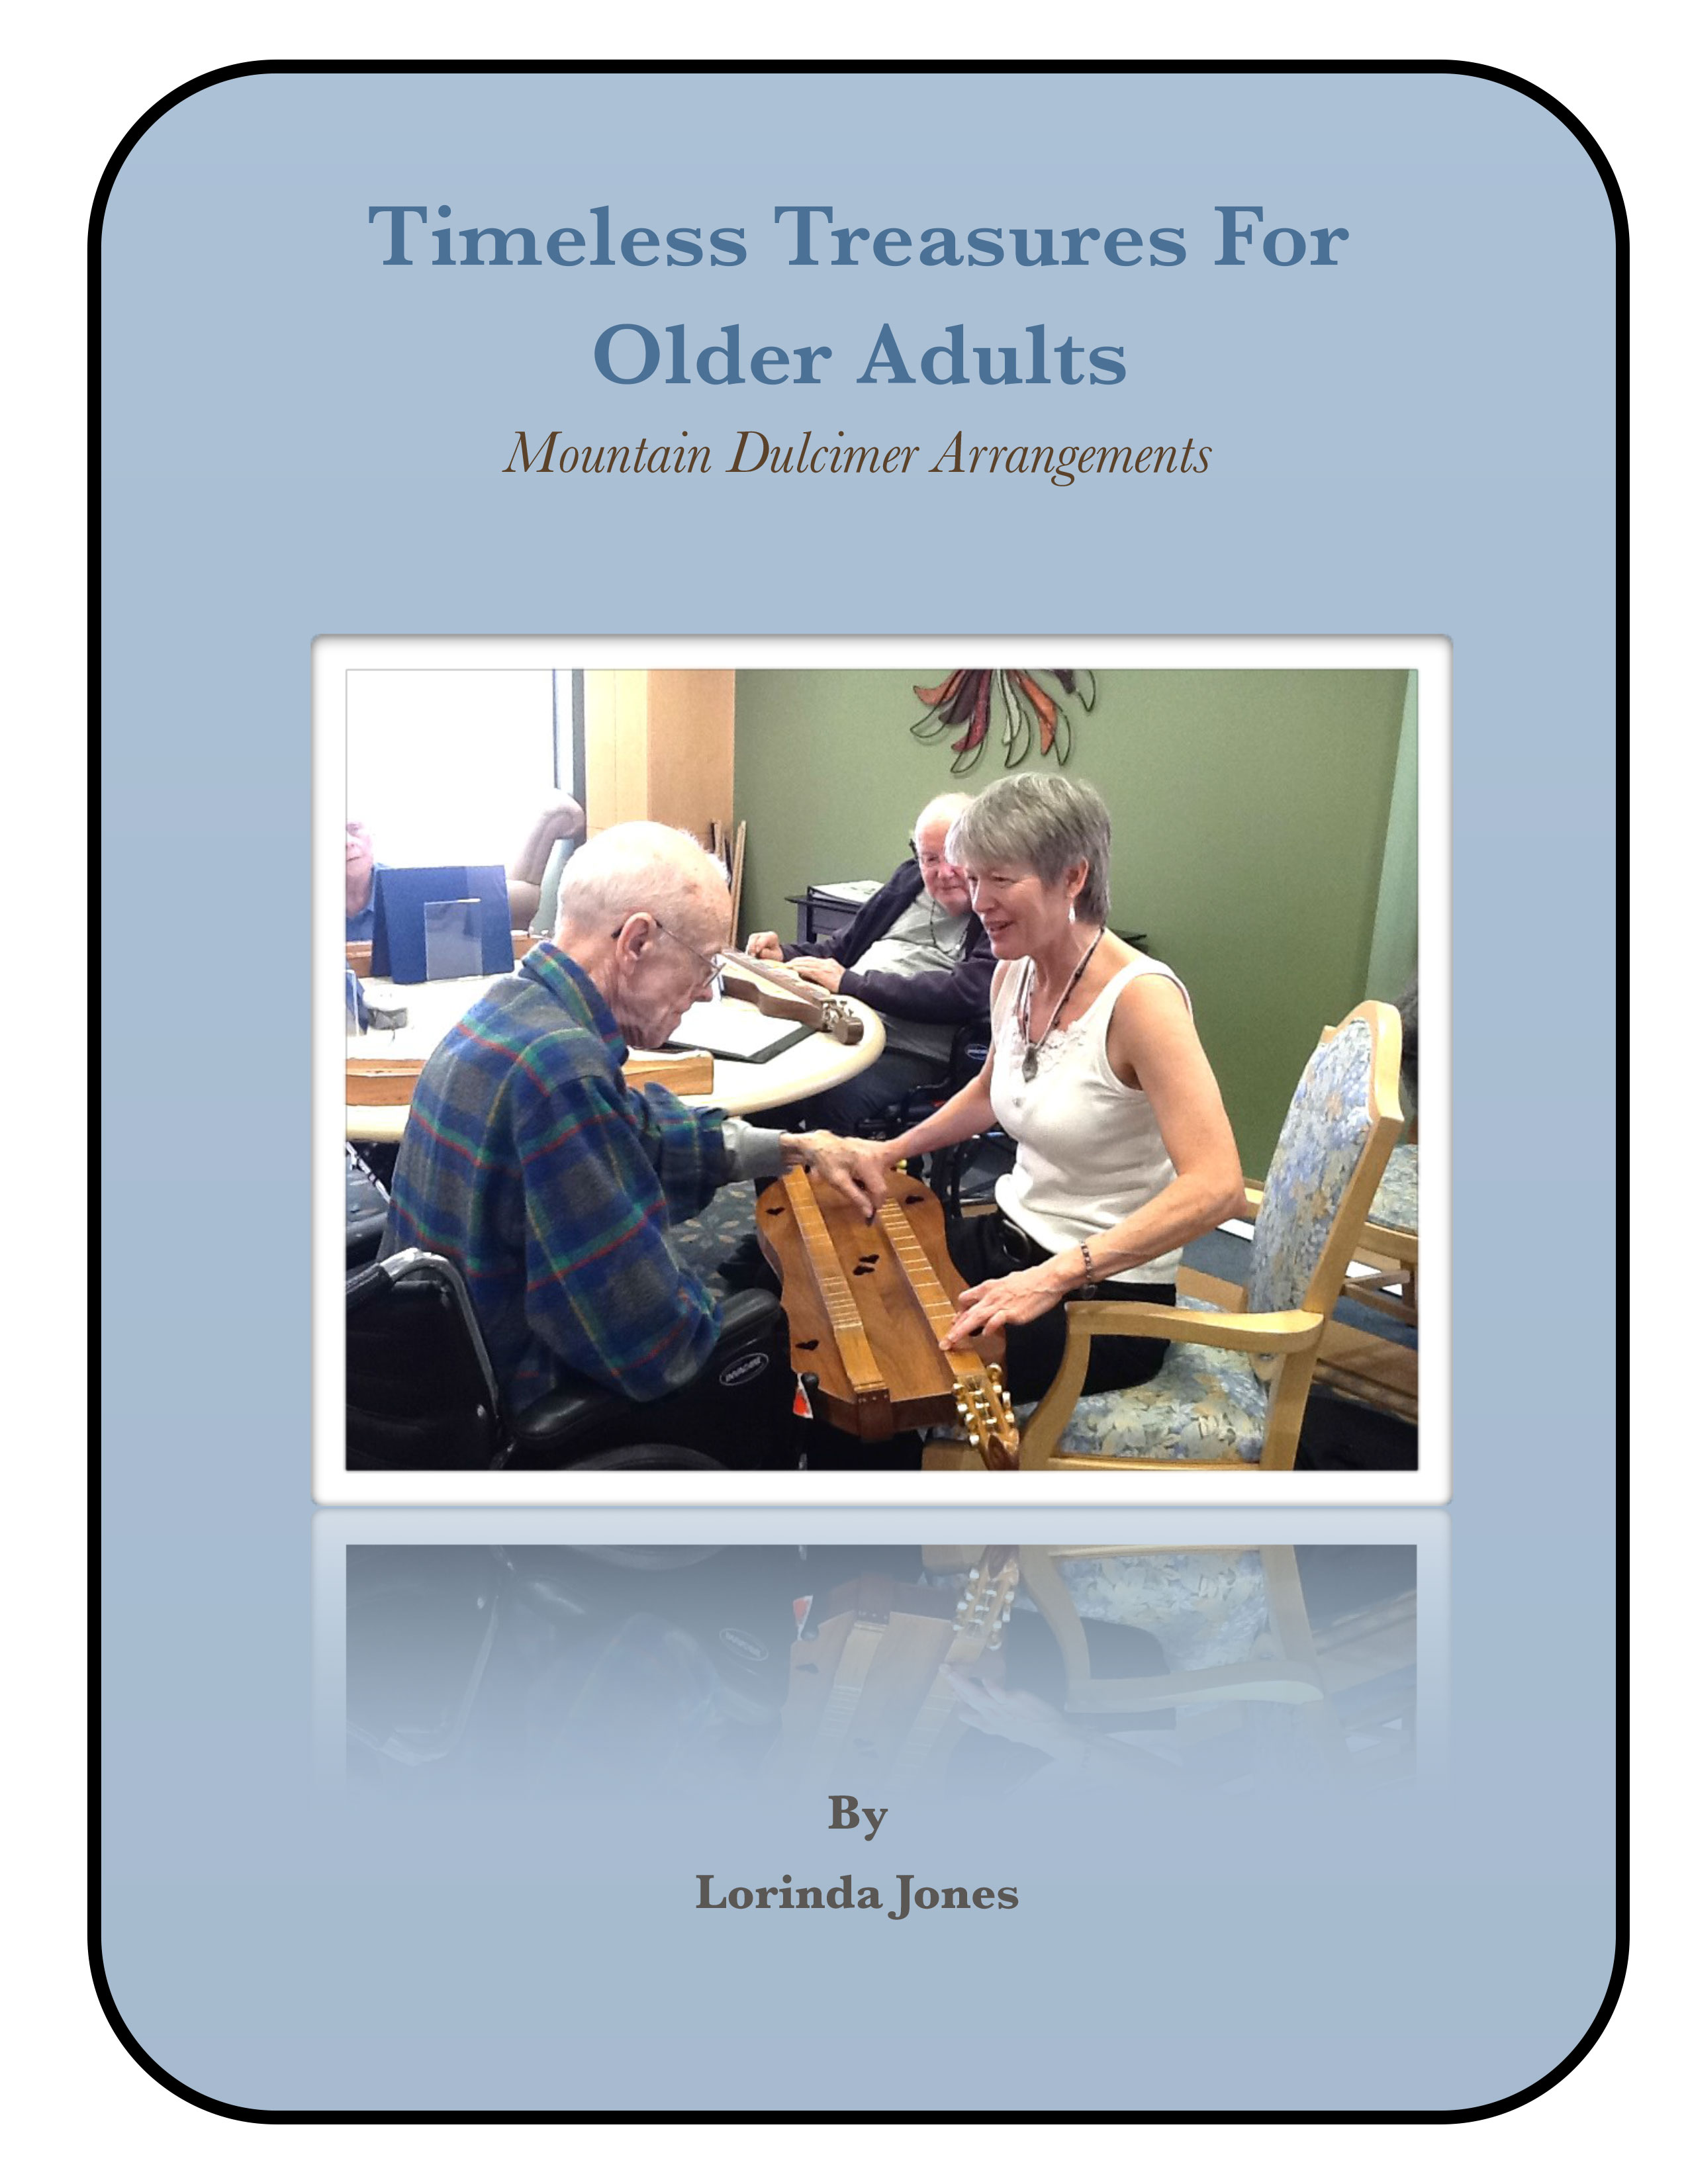 Timeless Treasures For Older Adults by Lorinda Jones 